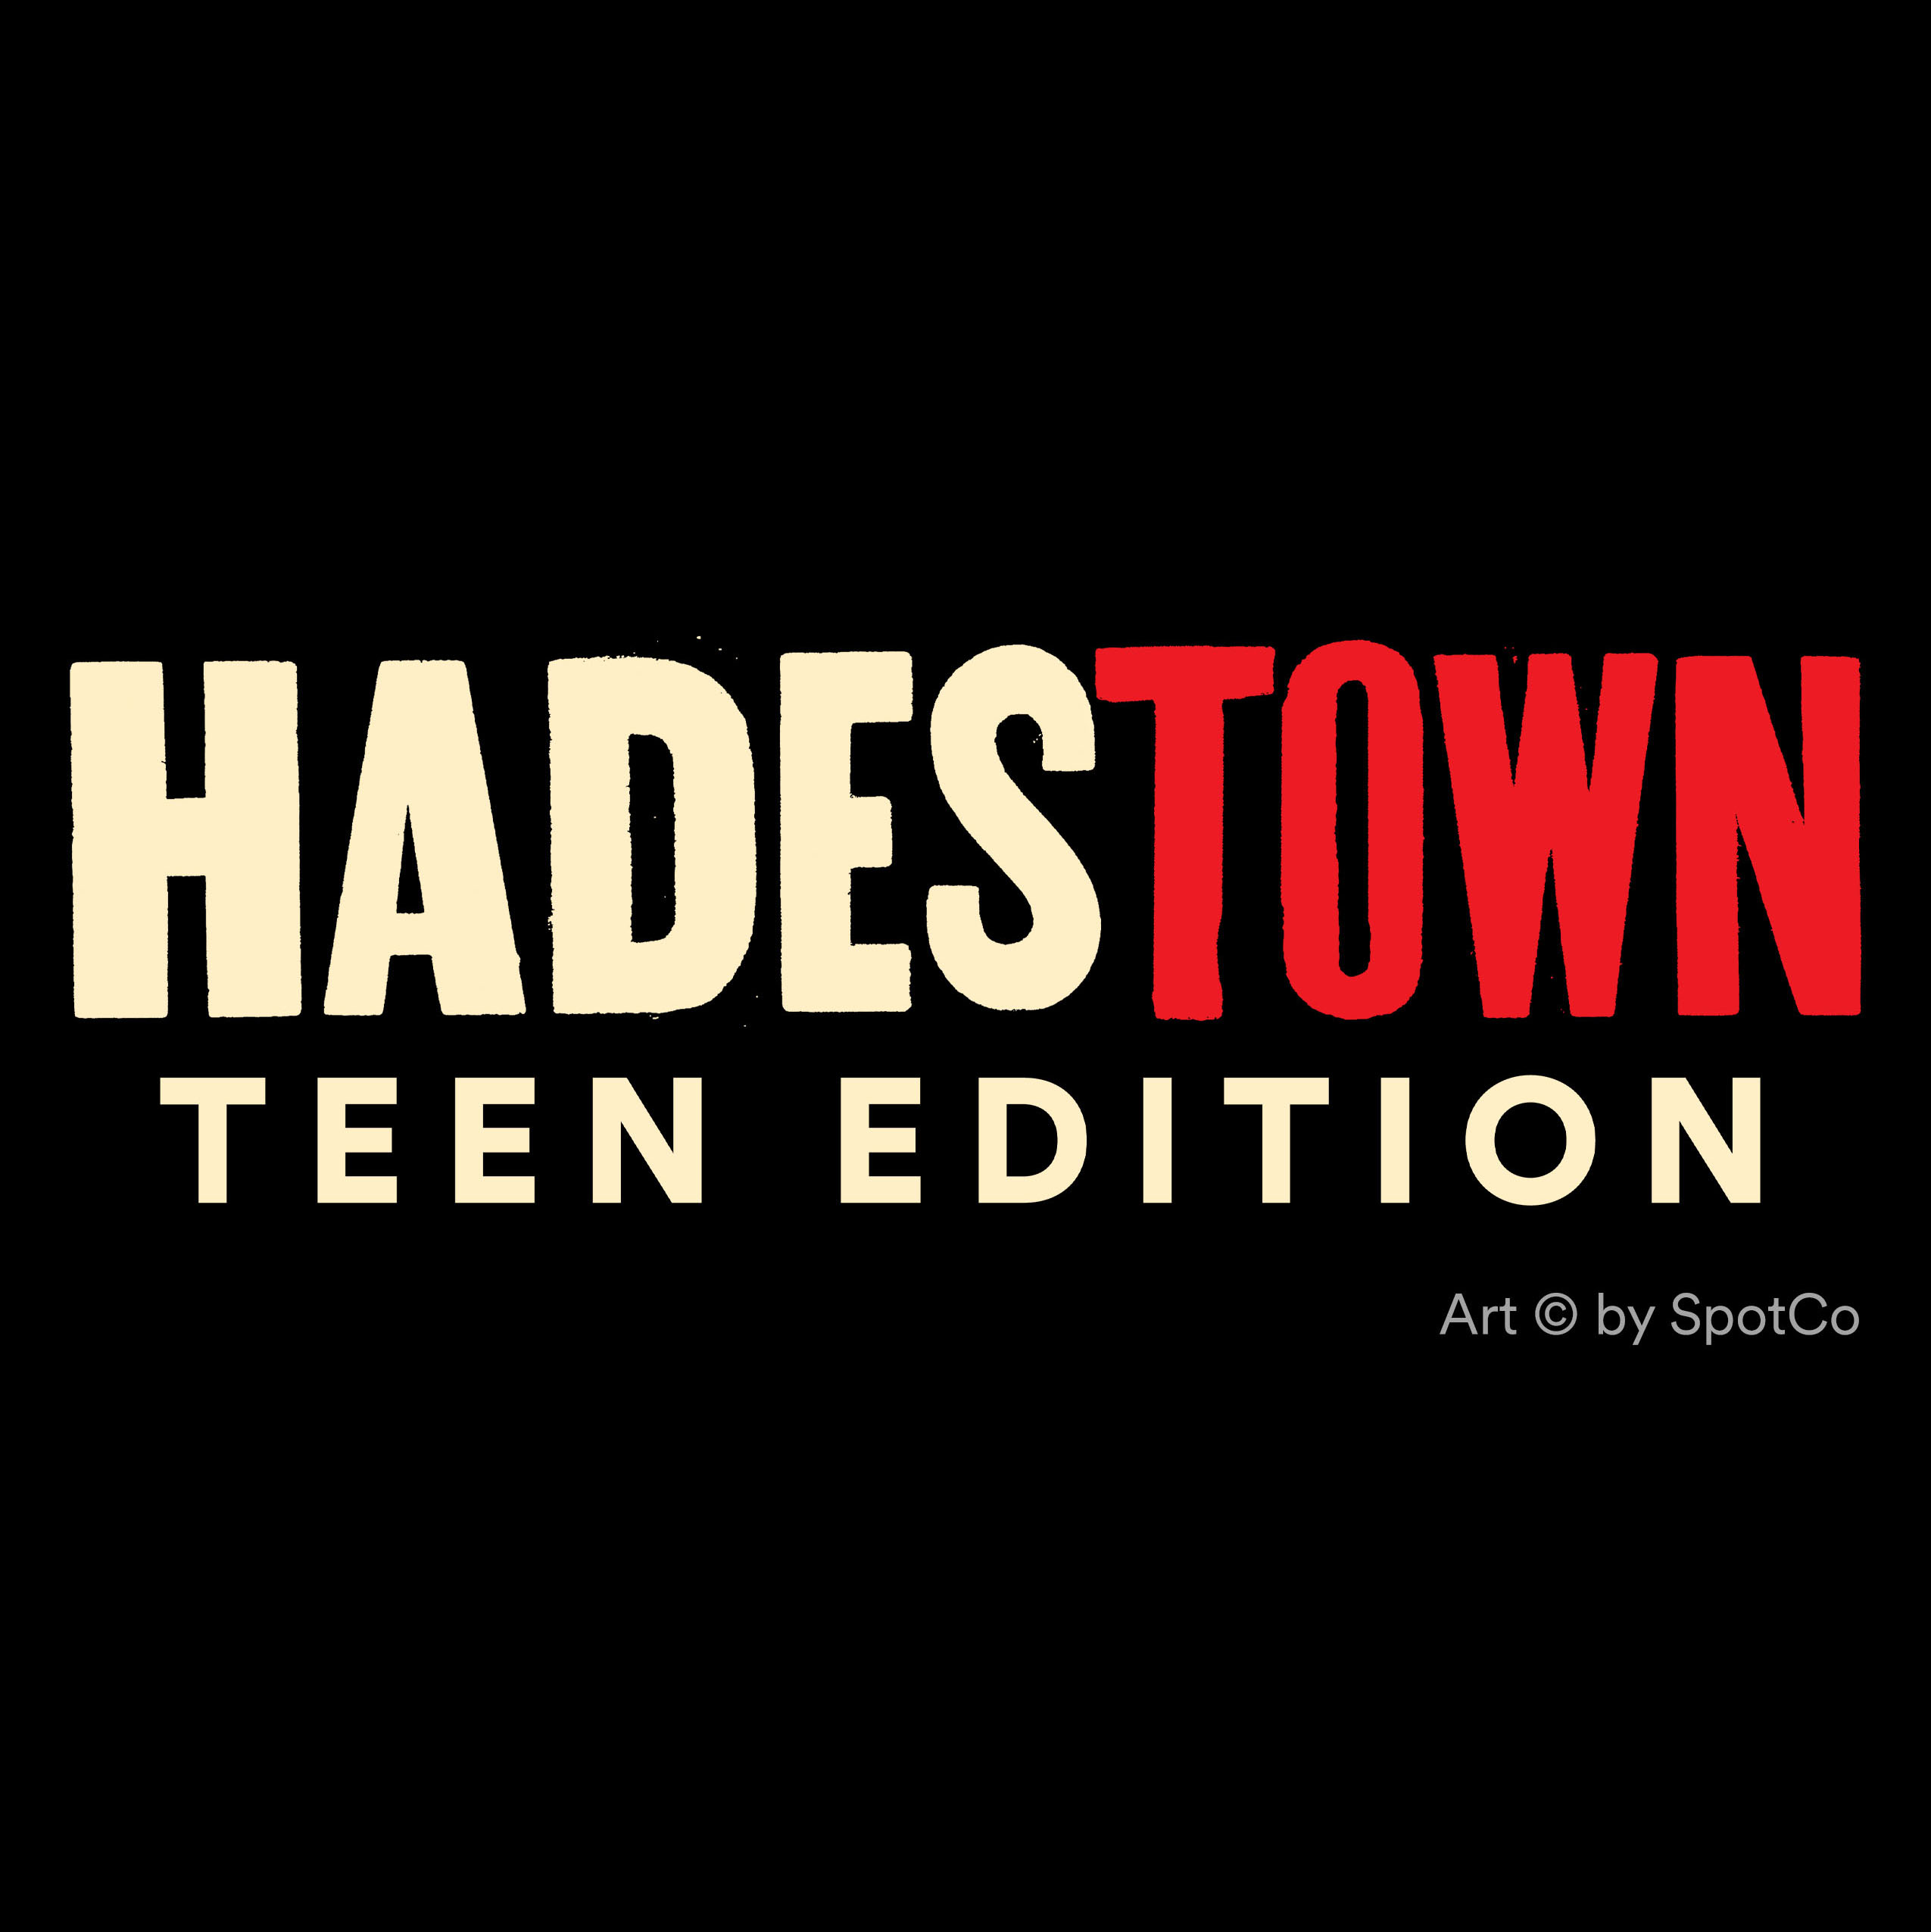 Hadestown Teen Edition logo square